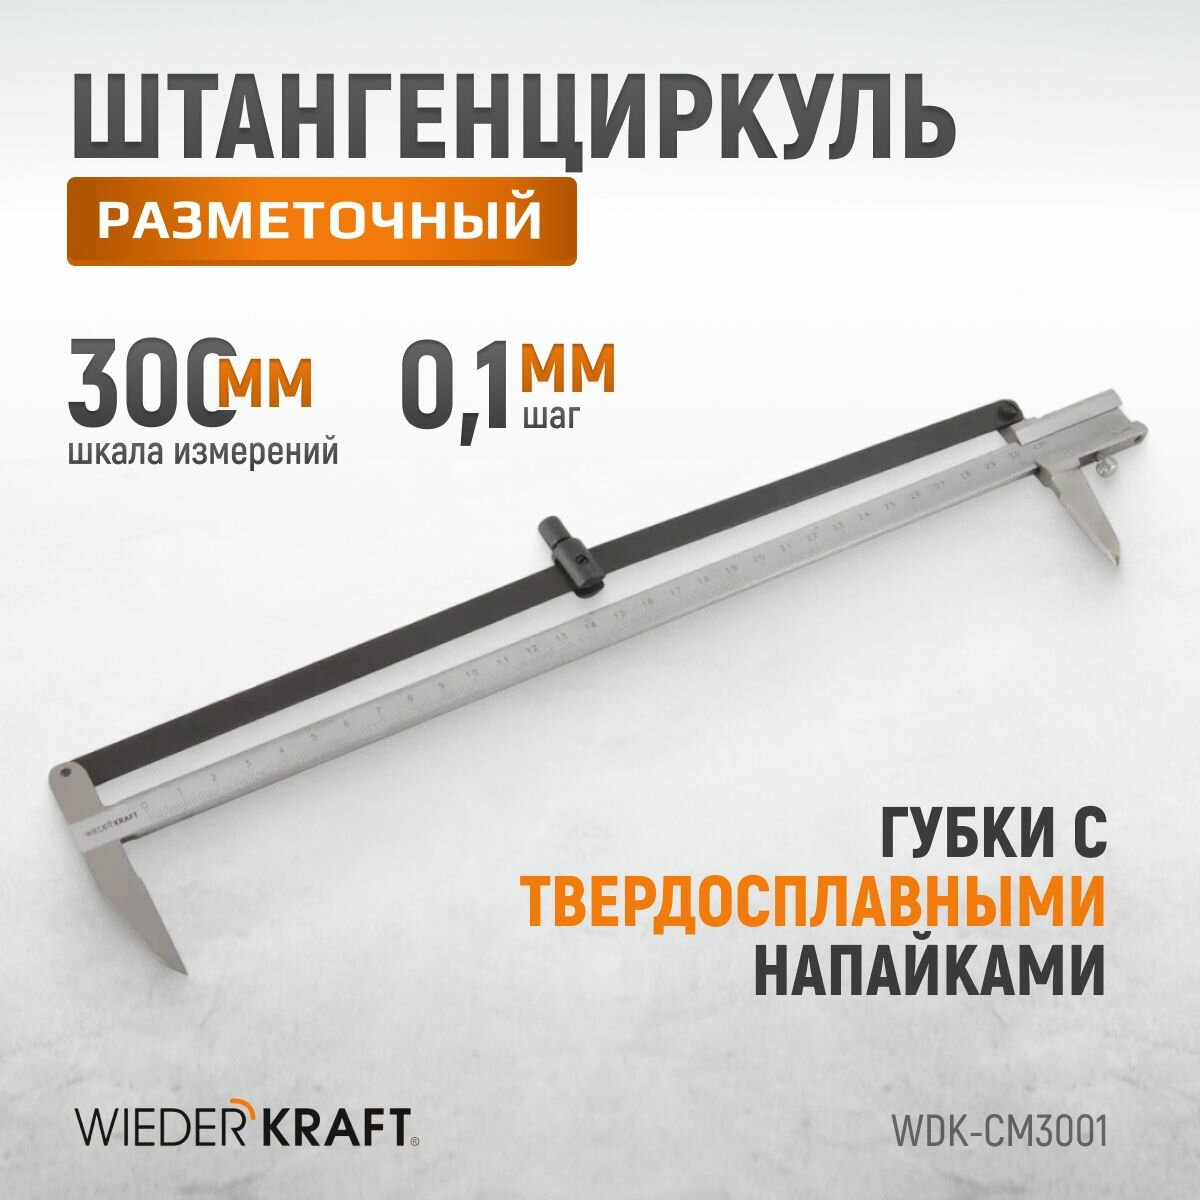 Штангенциркуль WIEDERKRAFT разметочный 300 мм, 0,1 мм WDK-CM3001